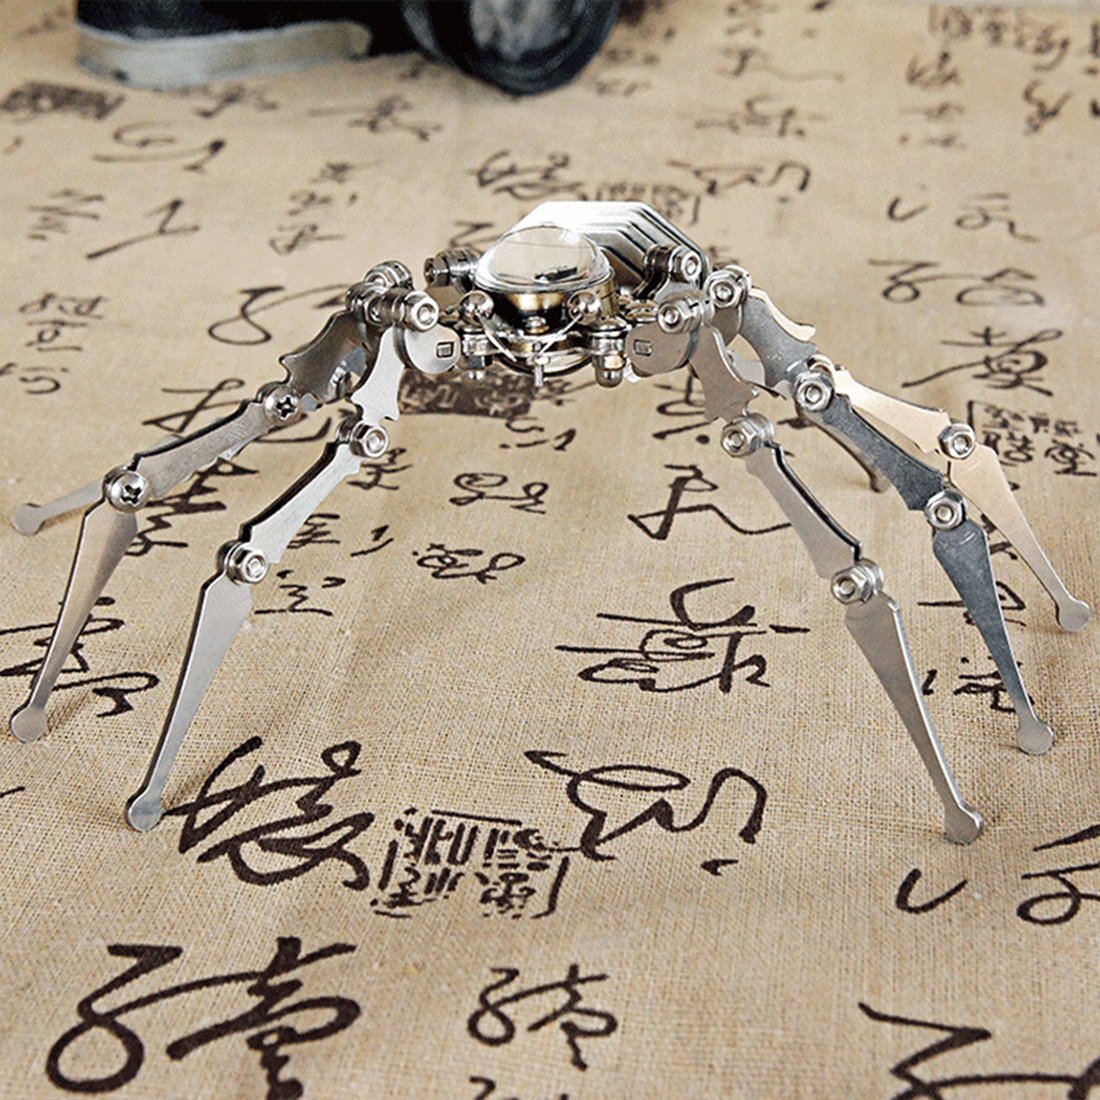 3D Stainless Steel Assembled Spider Clock Model Handmade Crafts